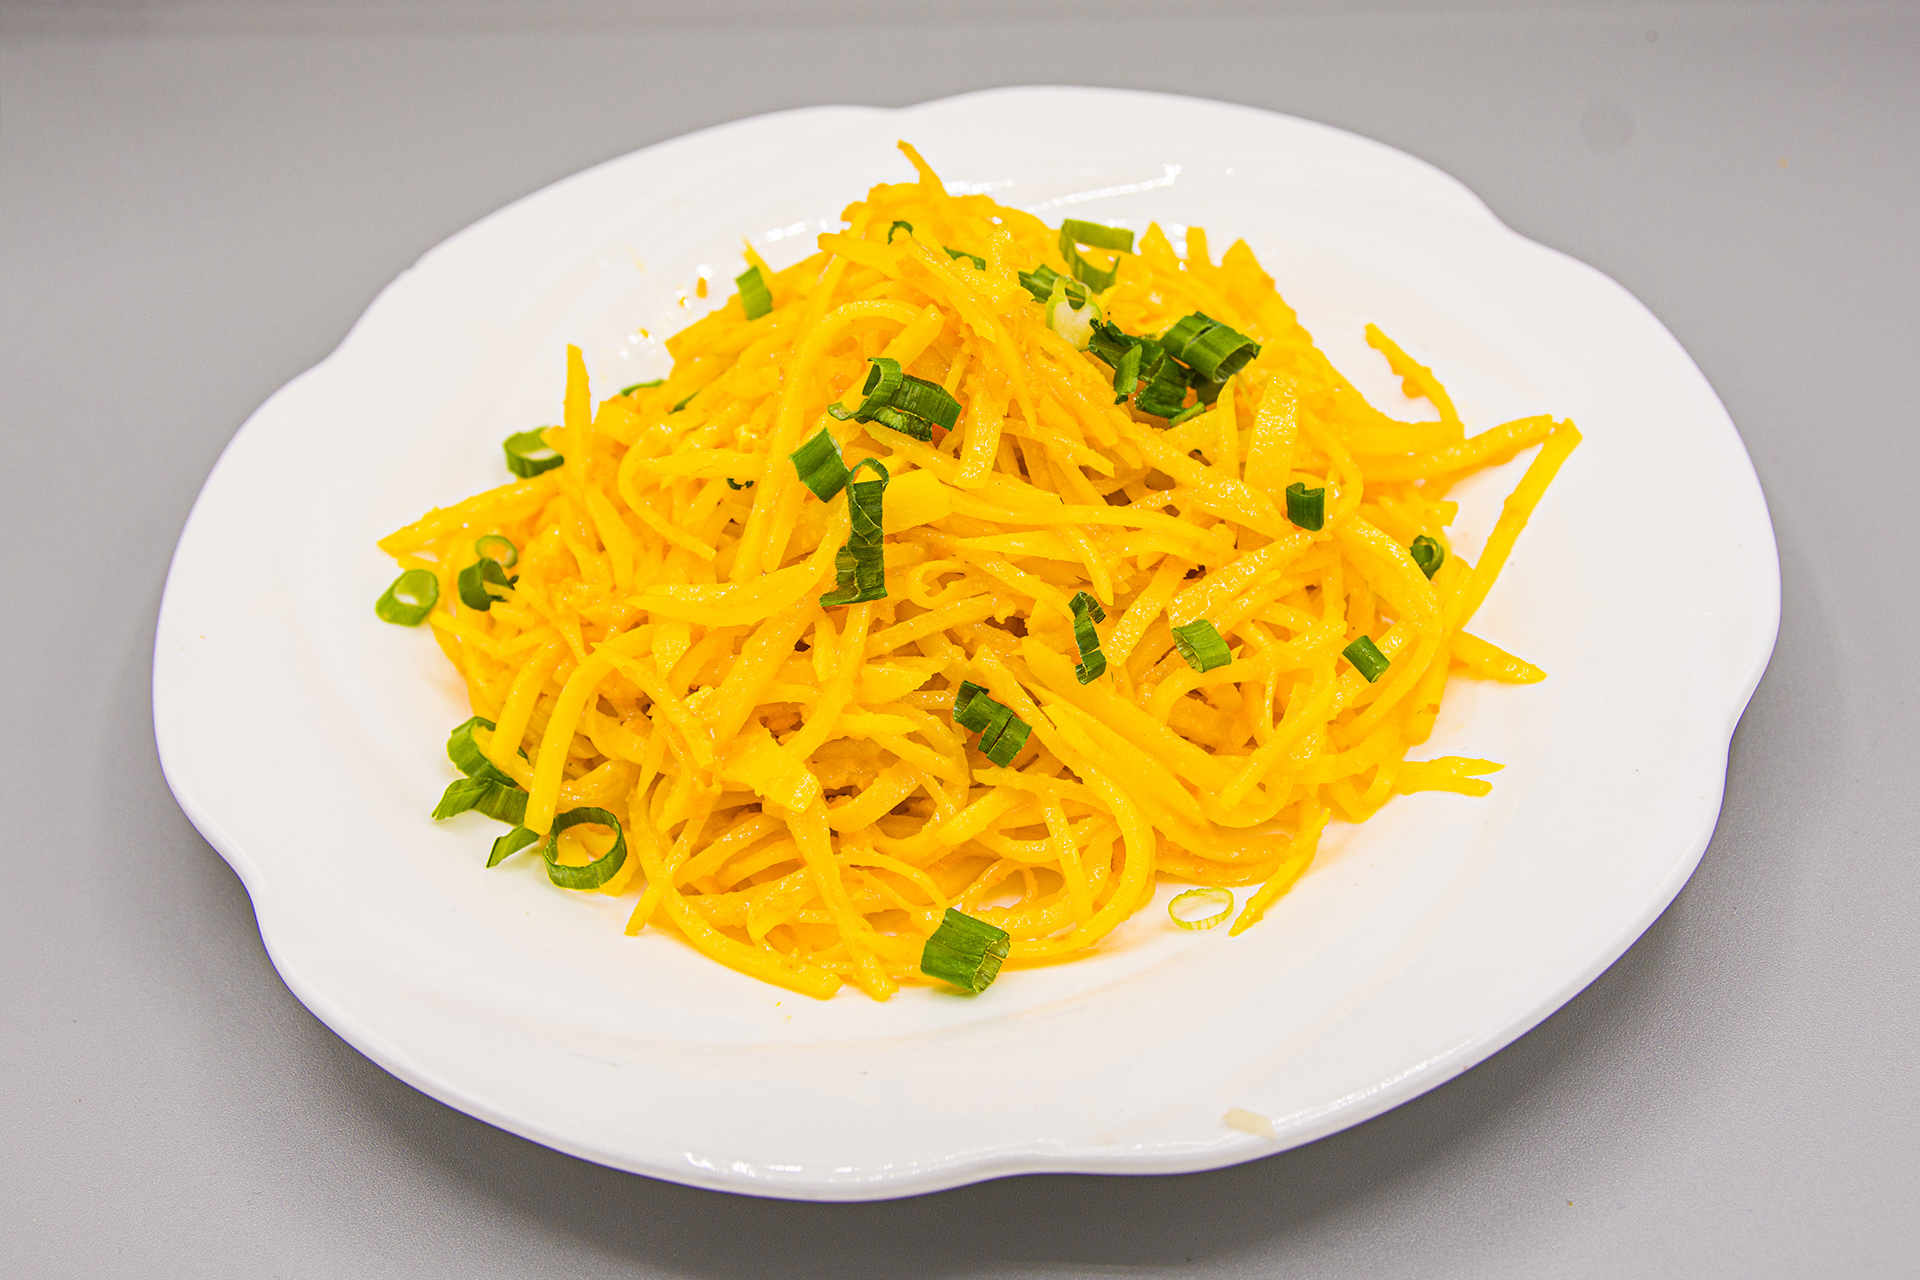 v21. shredded potato salty egg yolk 咸蛋黄土豆丝